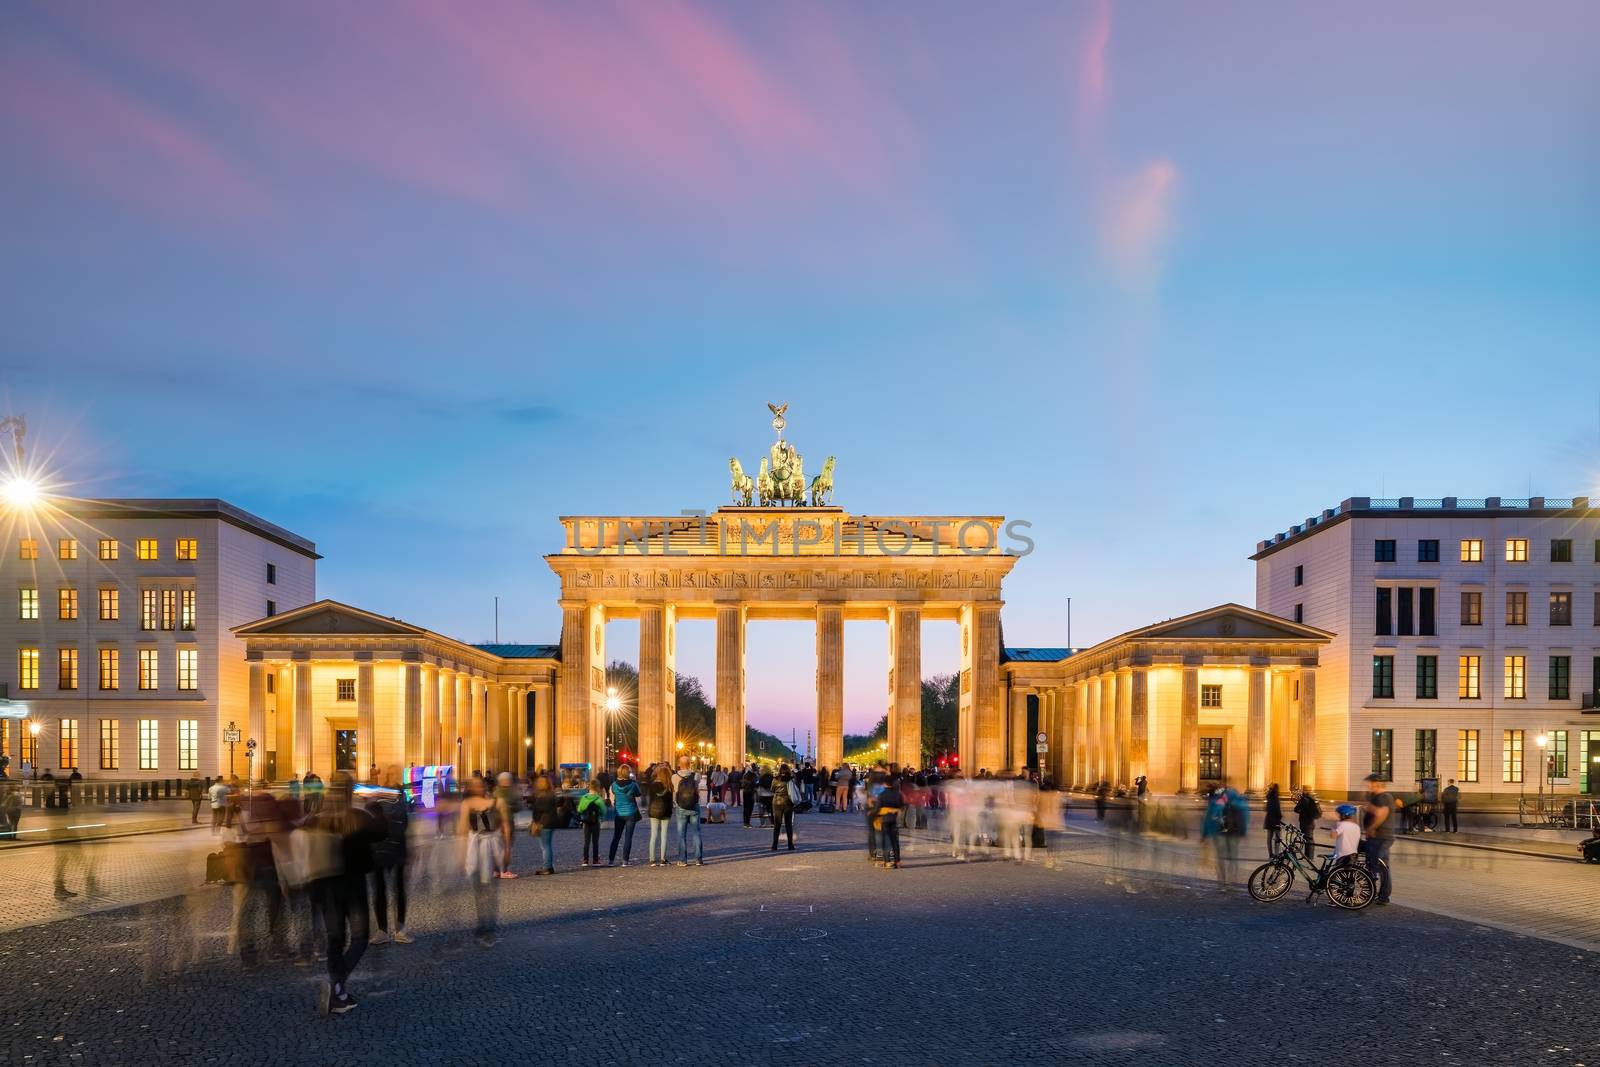 The Brandenburg Gate in Berlin at night by f11photo